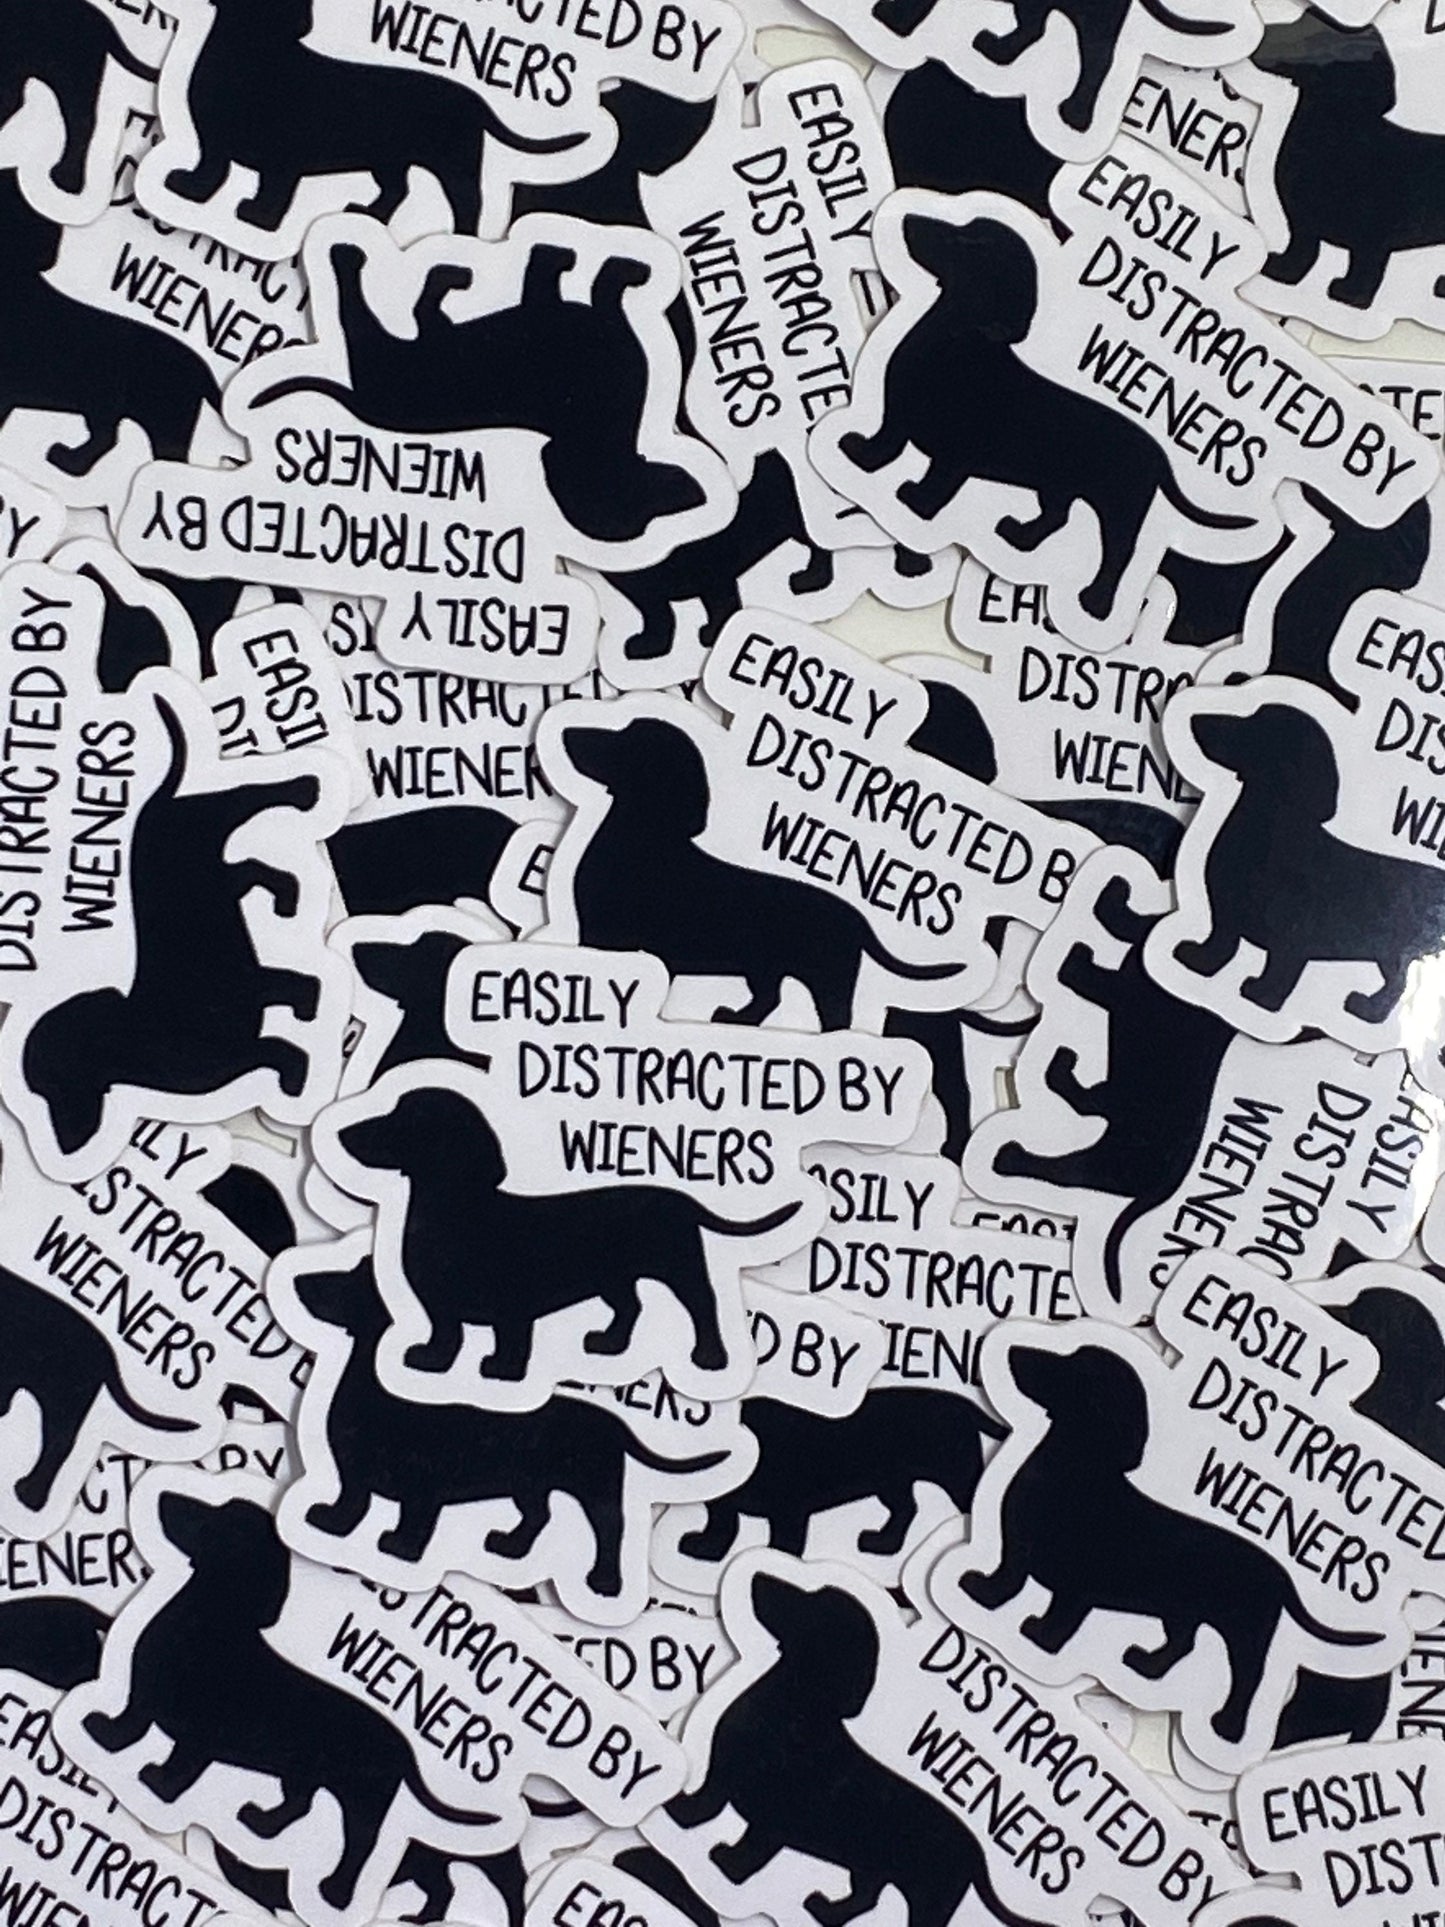 Easily Distracted By Wieners Vinyl Sticker